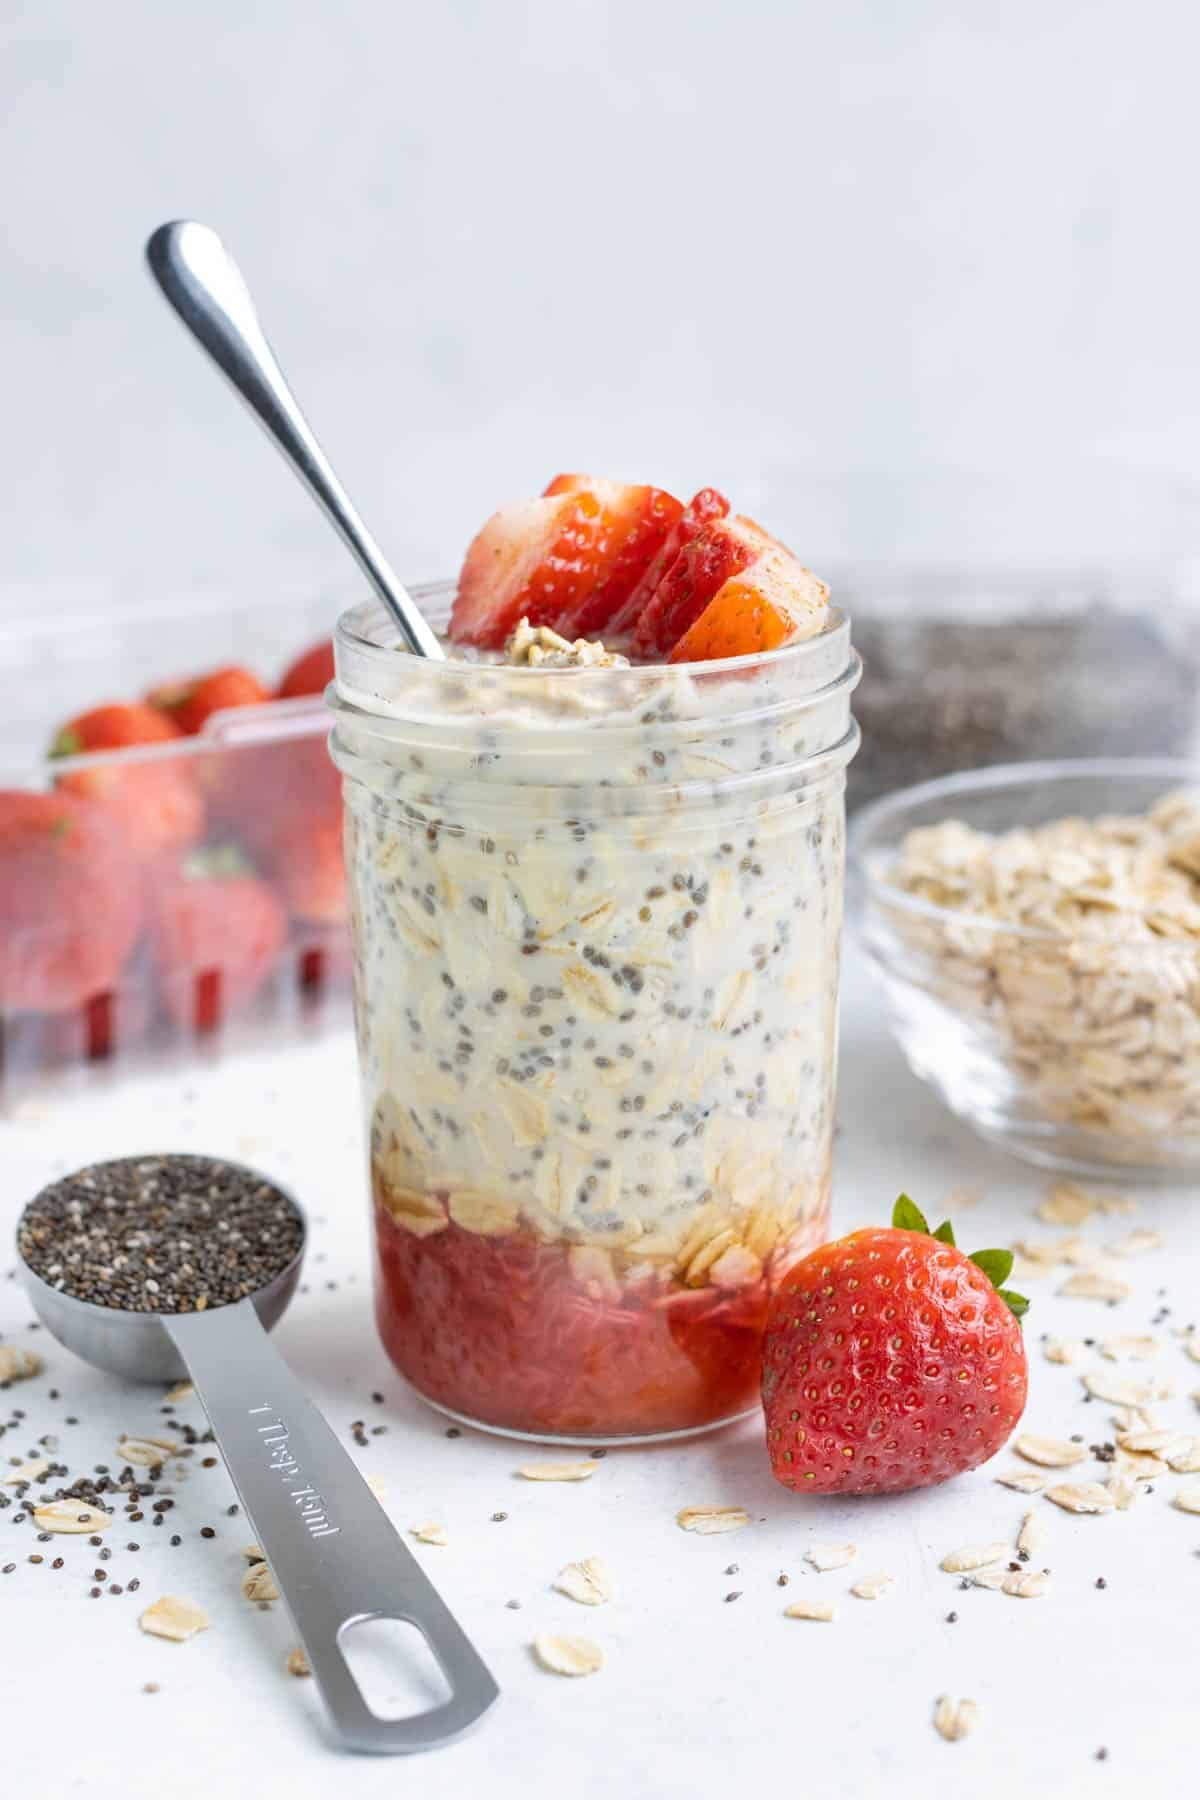 Strawberry Shortcake Overnight Oats using an easy oatmeal recipe for breakfast.